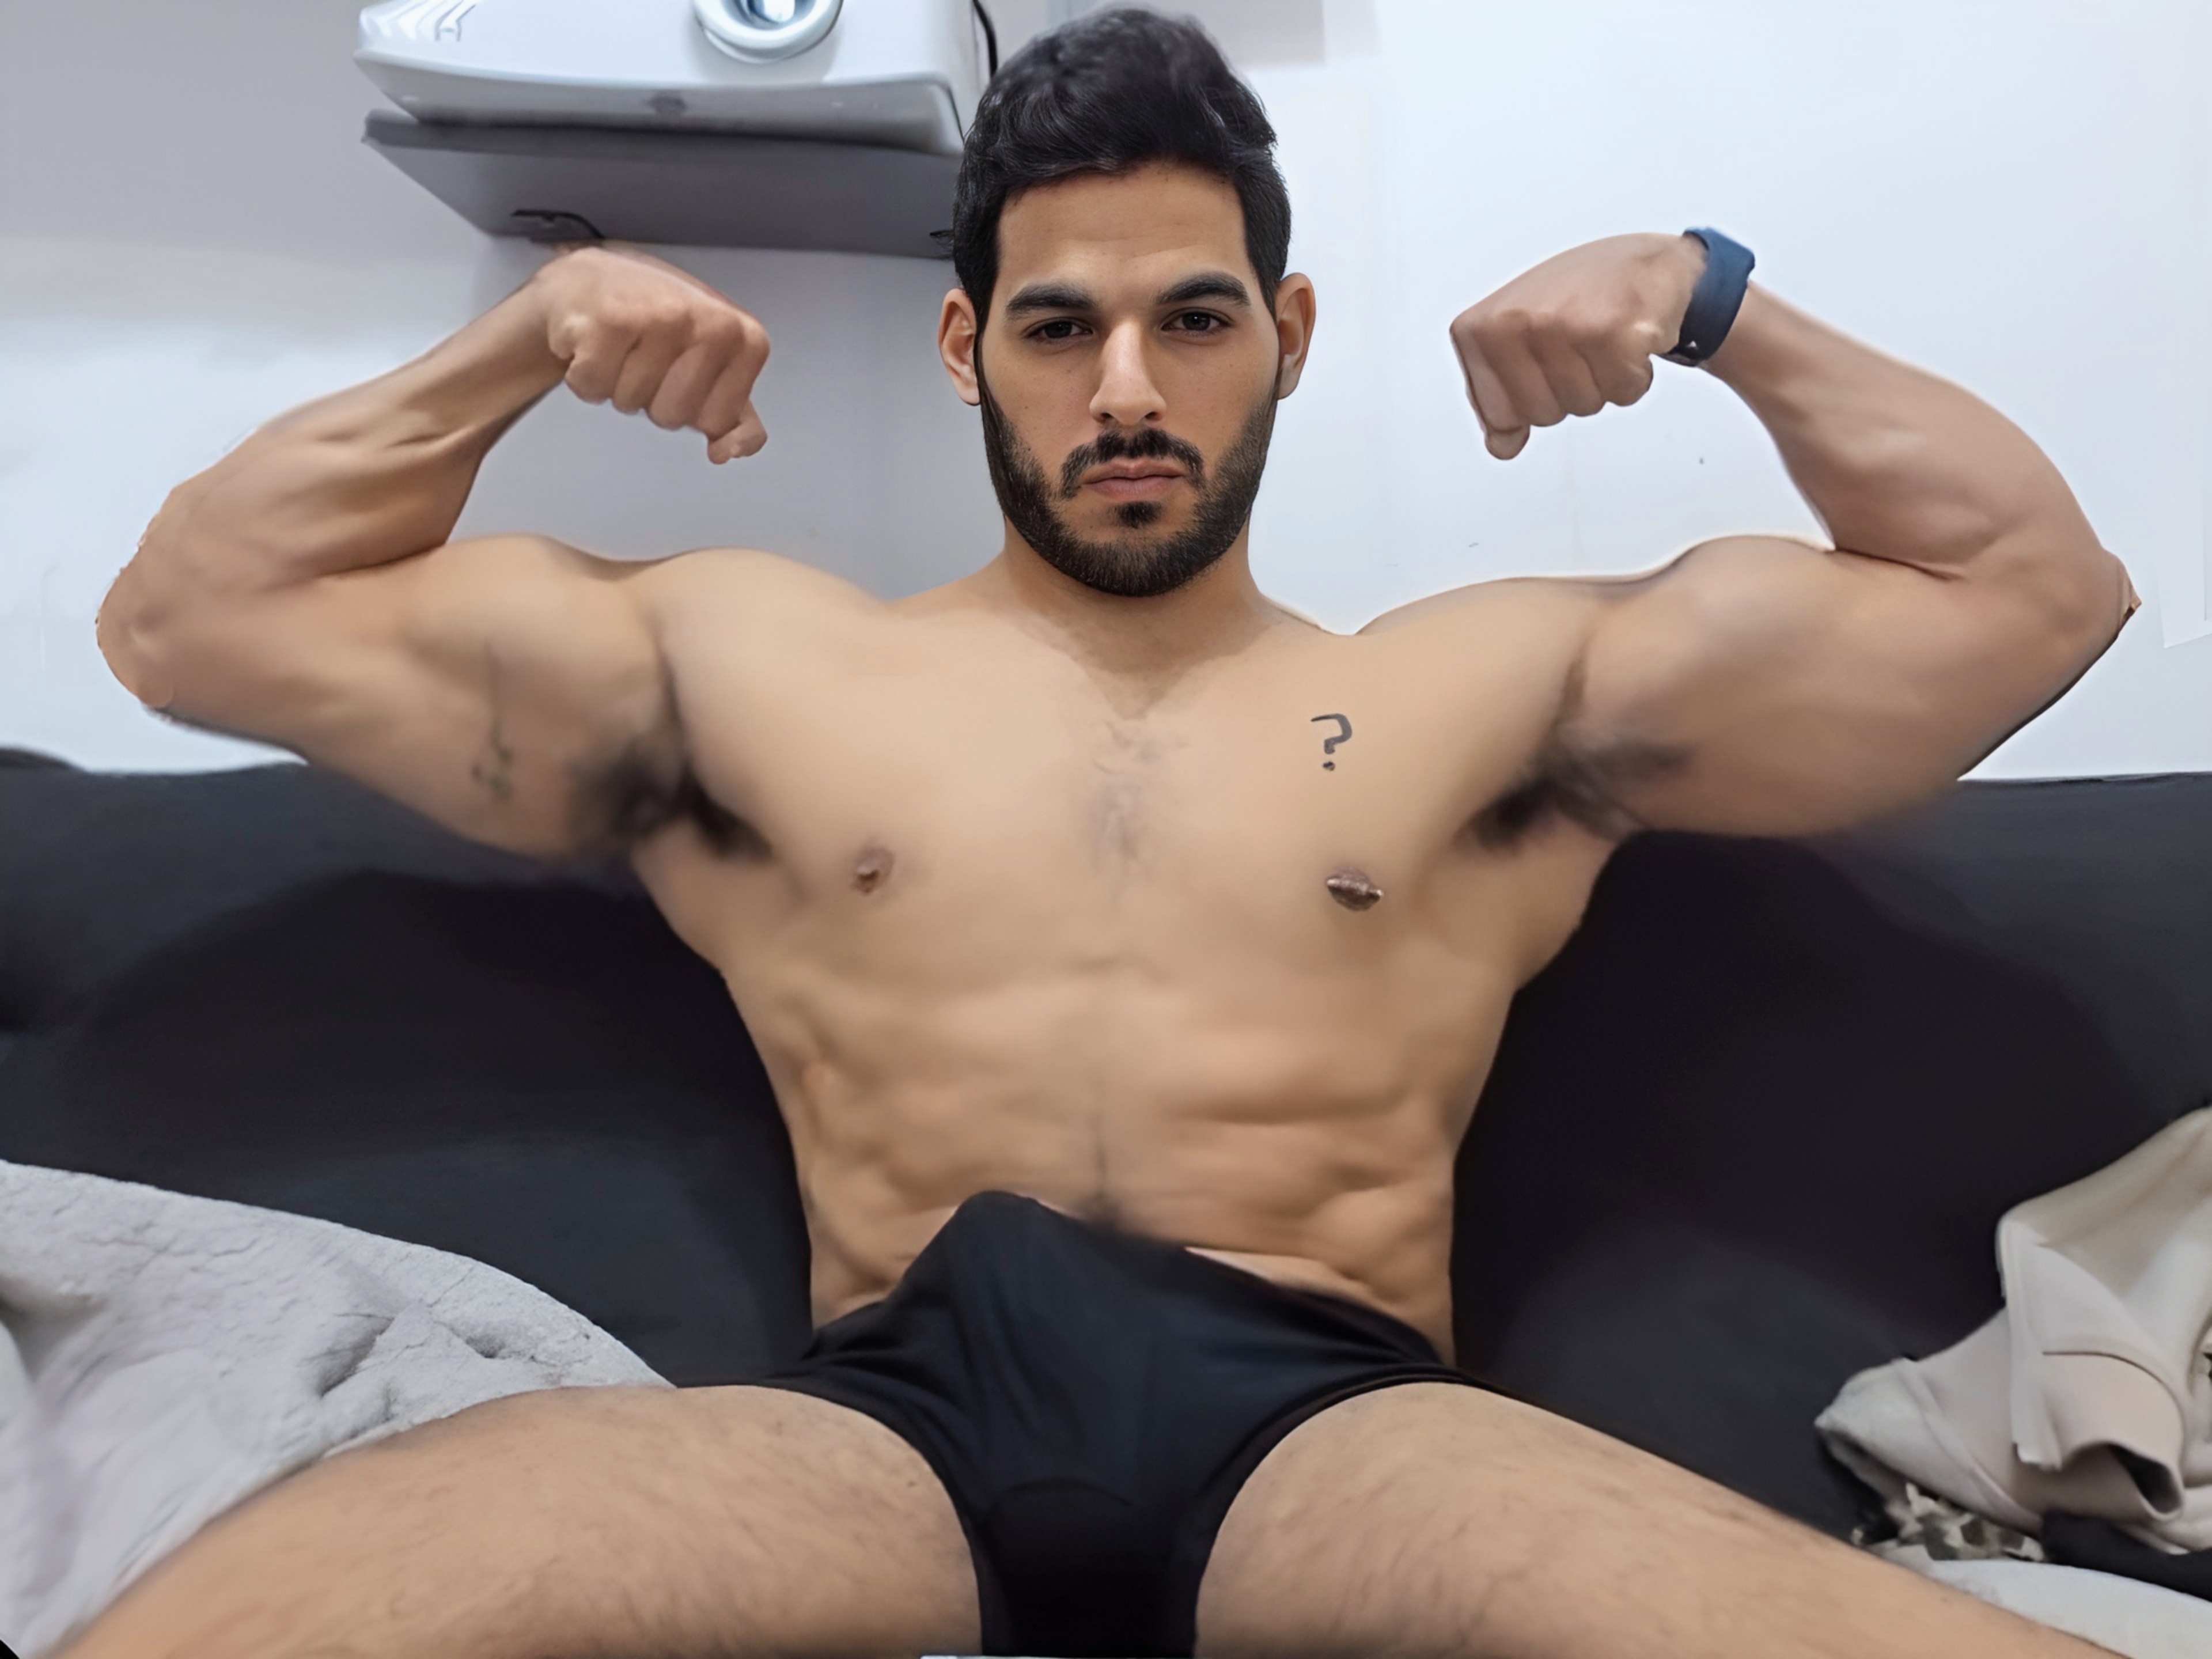 Hot Israeli Guy Cumming in His Underwear